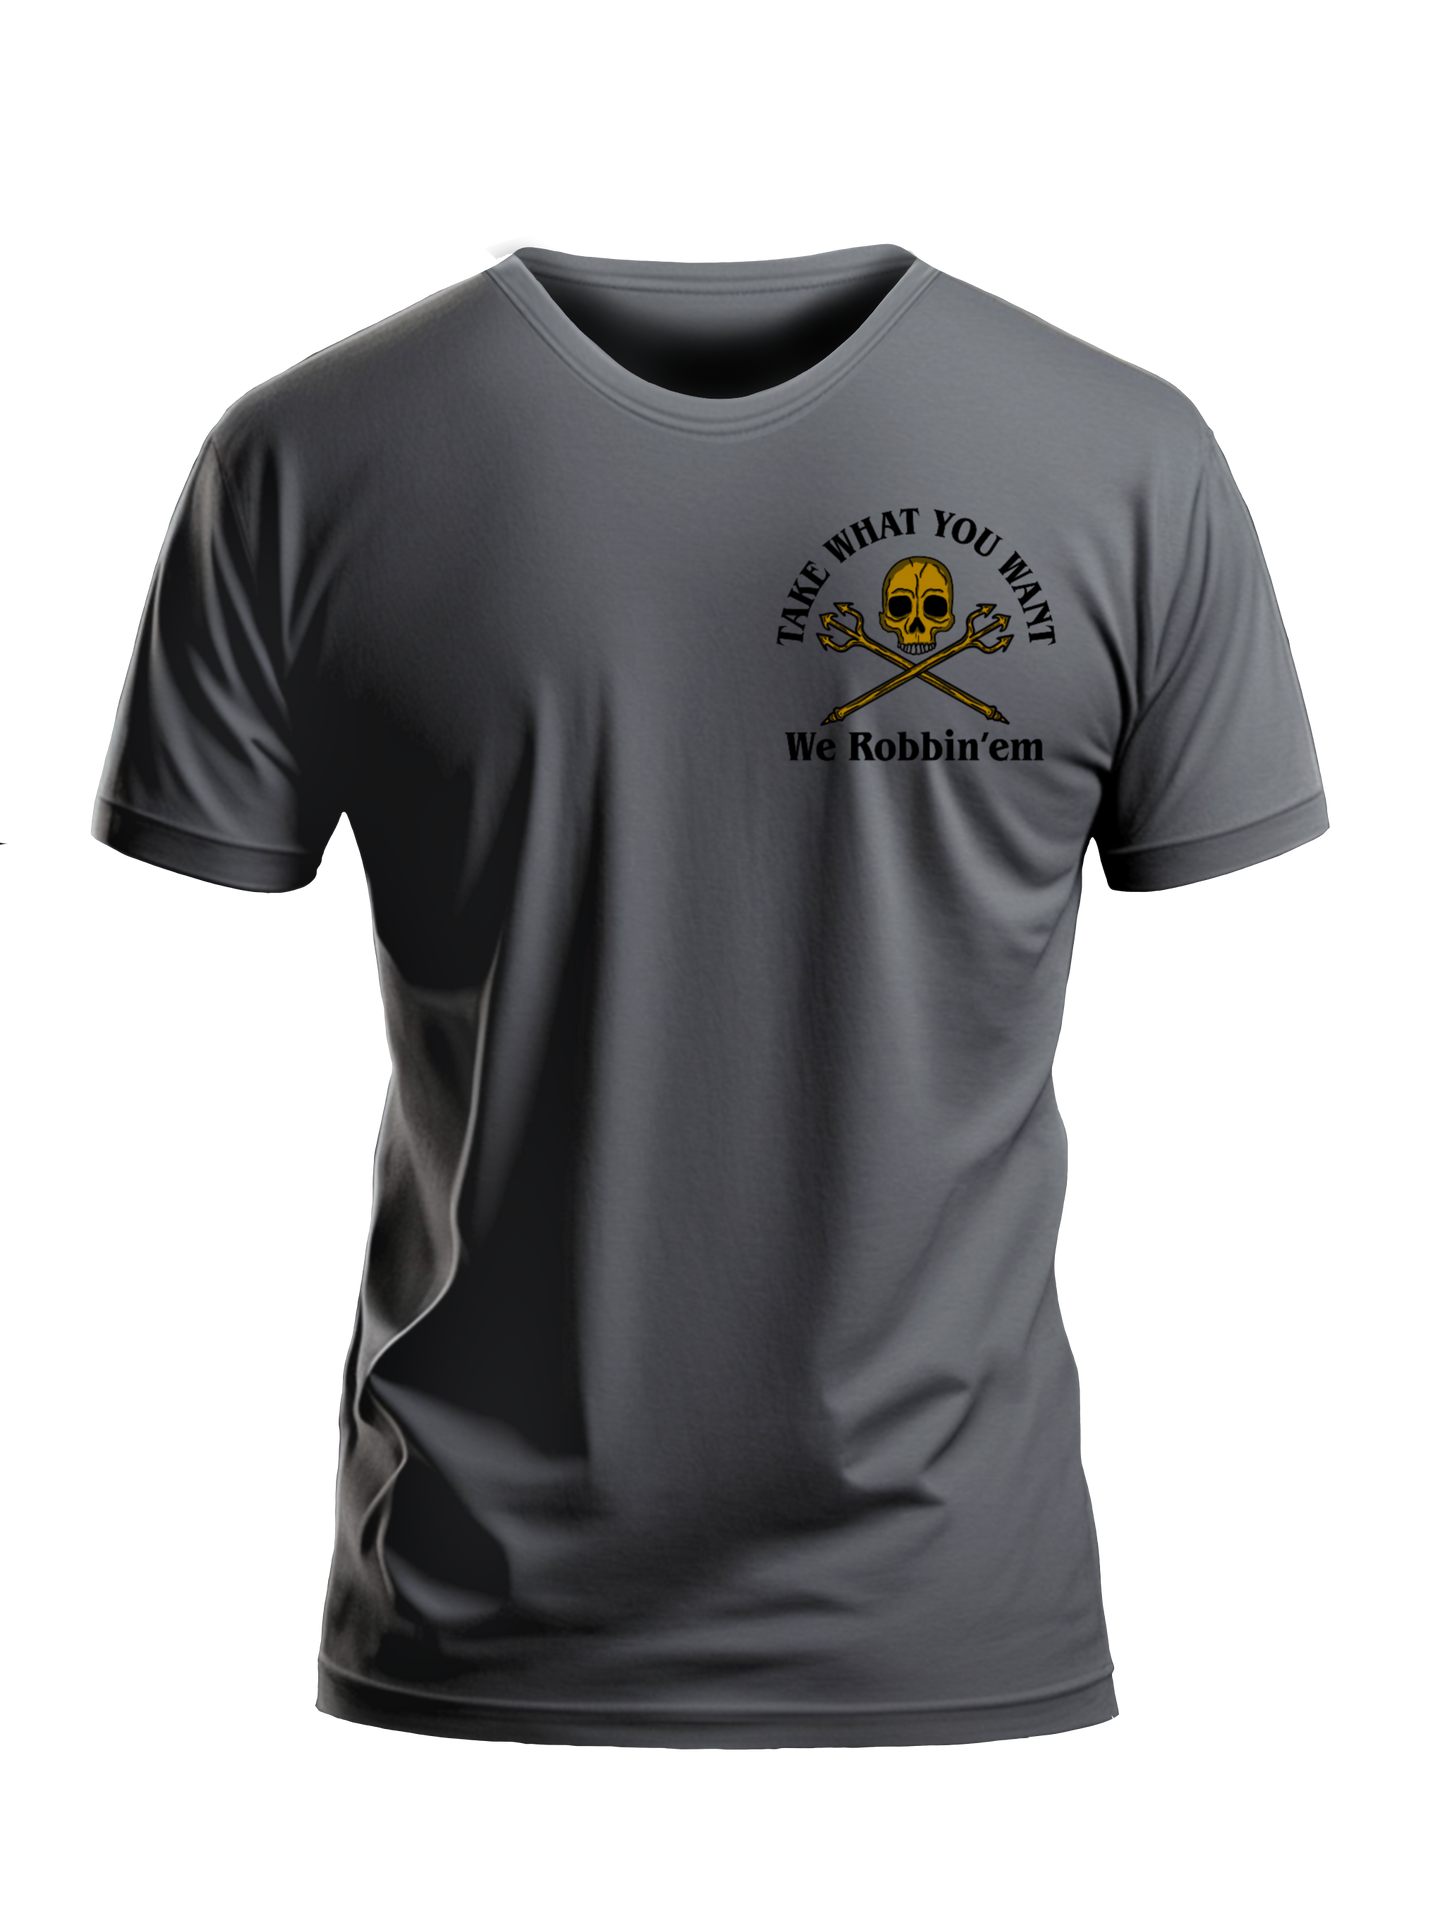 Short Sleeve UPF gray shirt - Take What You Want